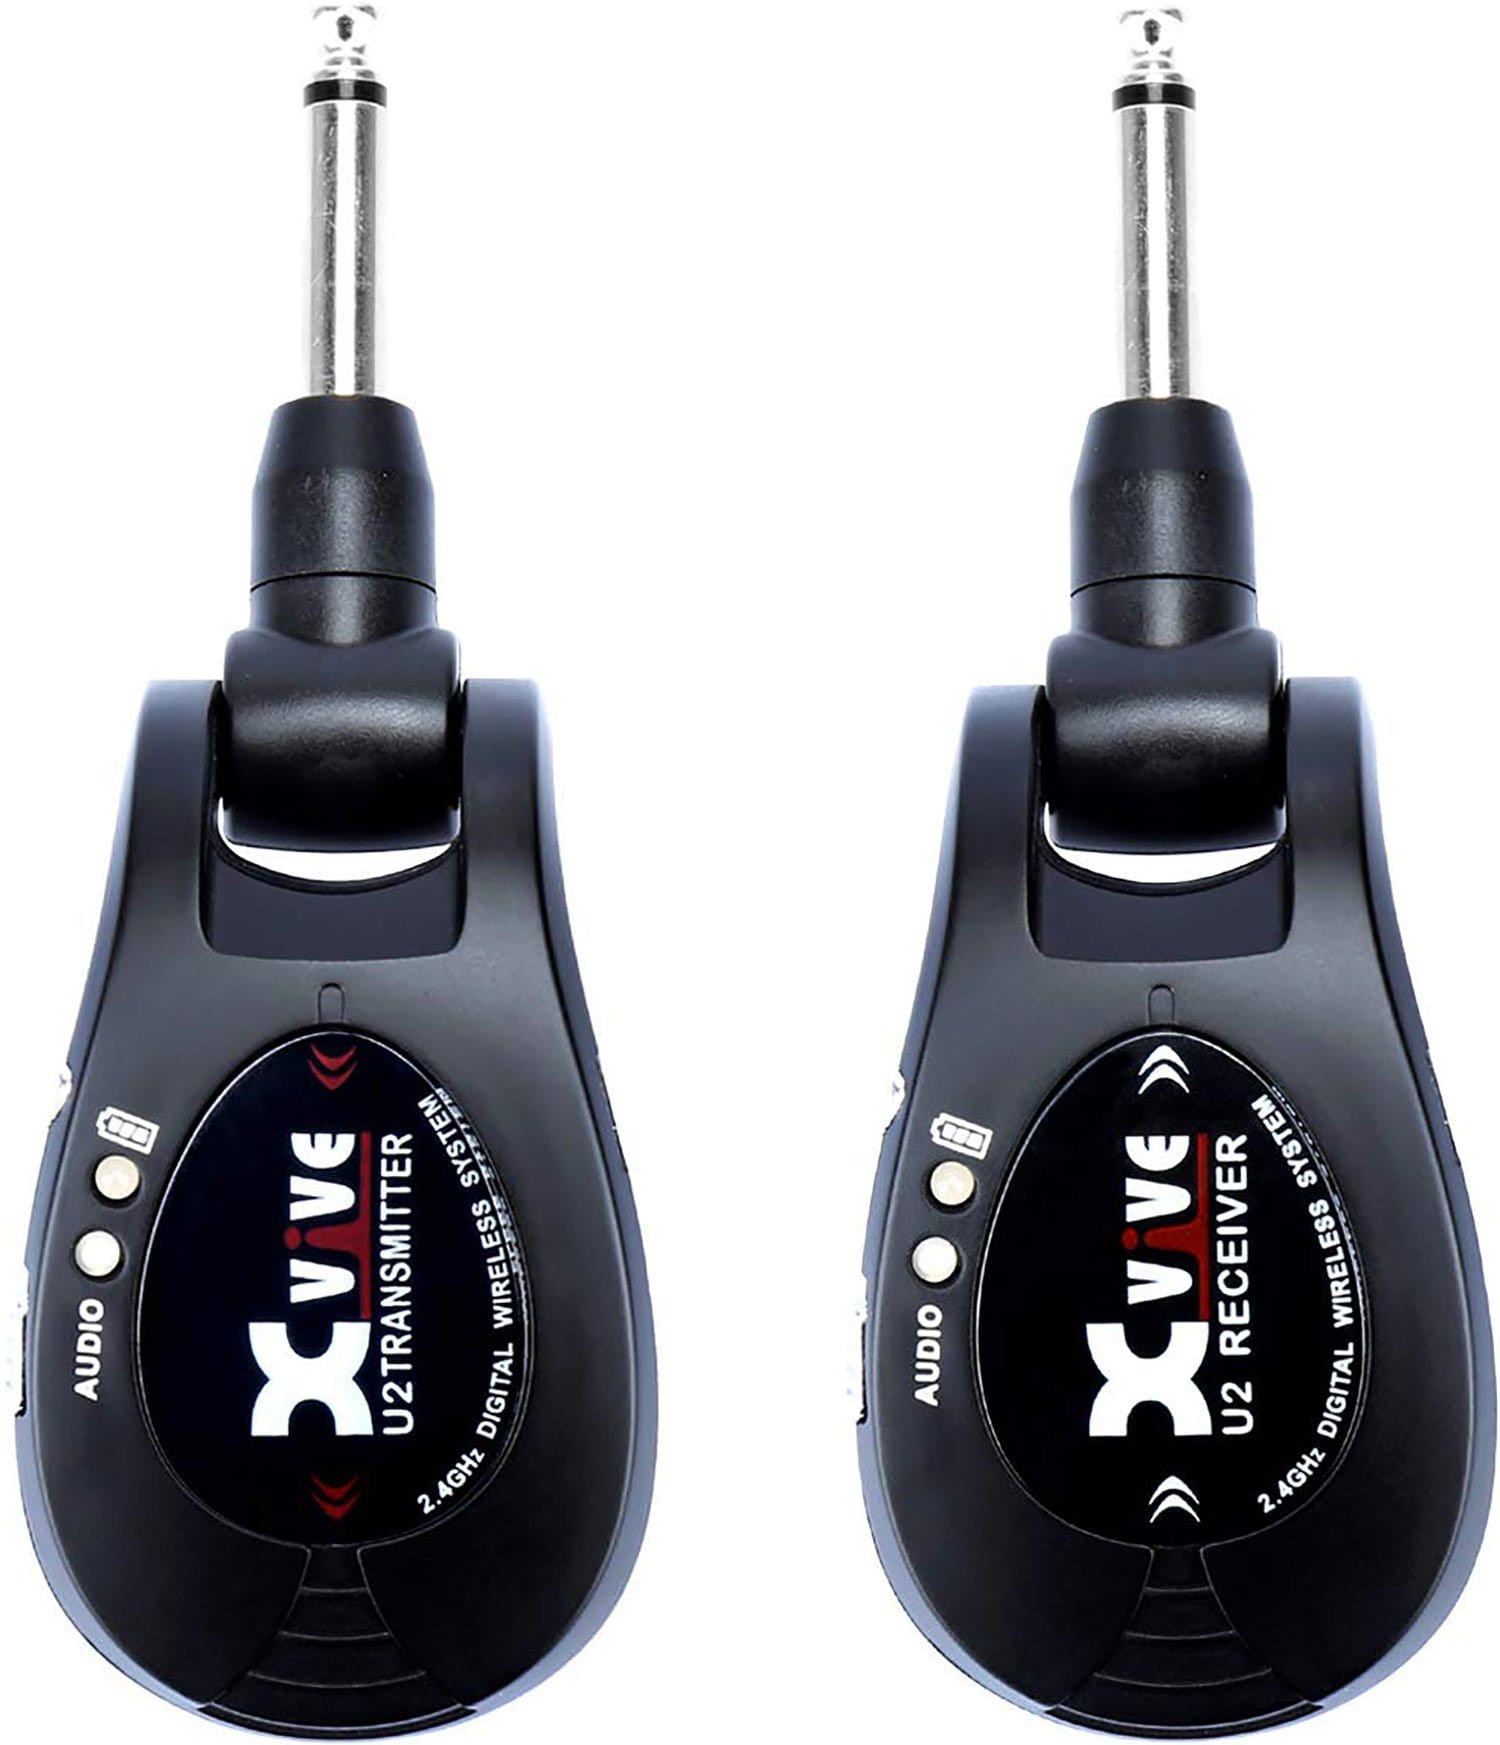 Xvive U2 Rechargable Guitar Wireless System Black